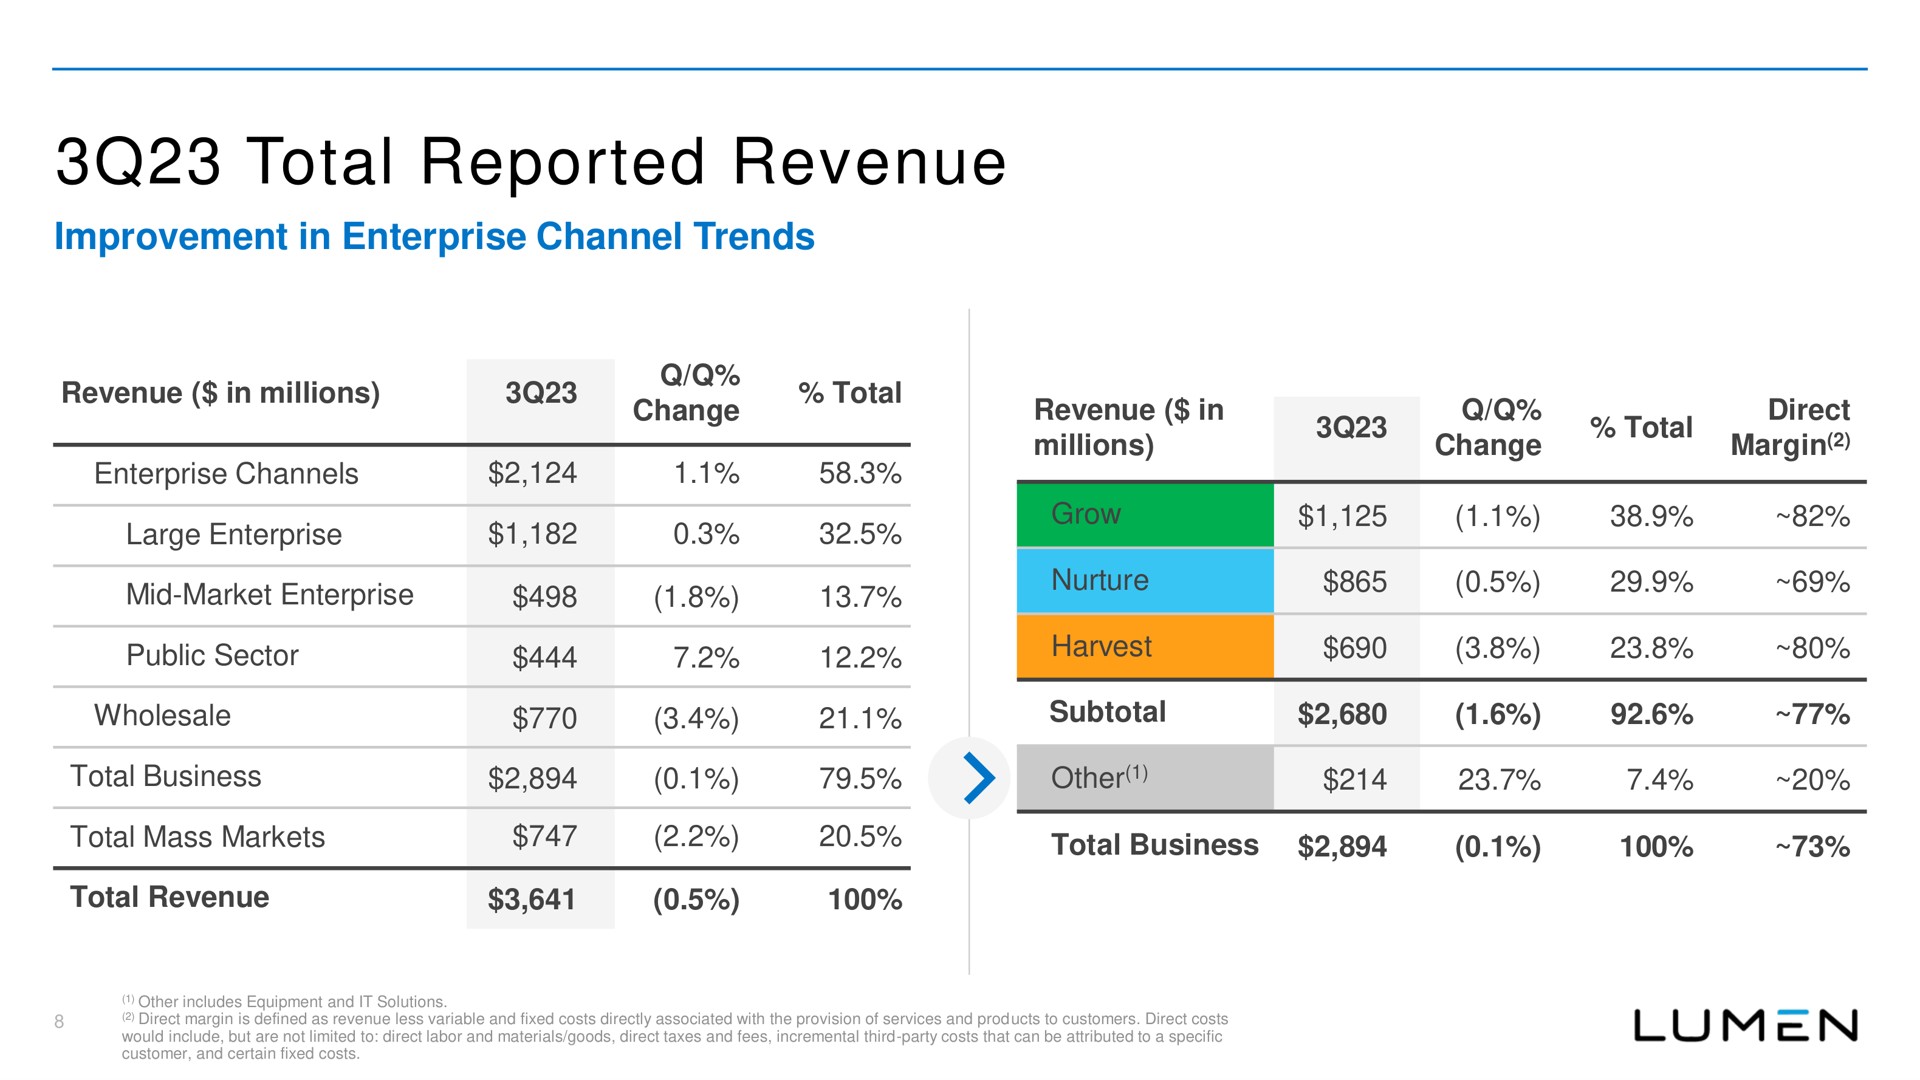 total reported revenue improvement in enterprise channel trends millions ooze | Lumen